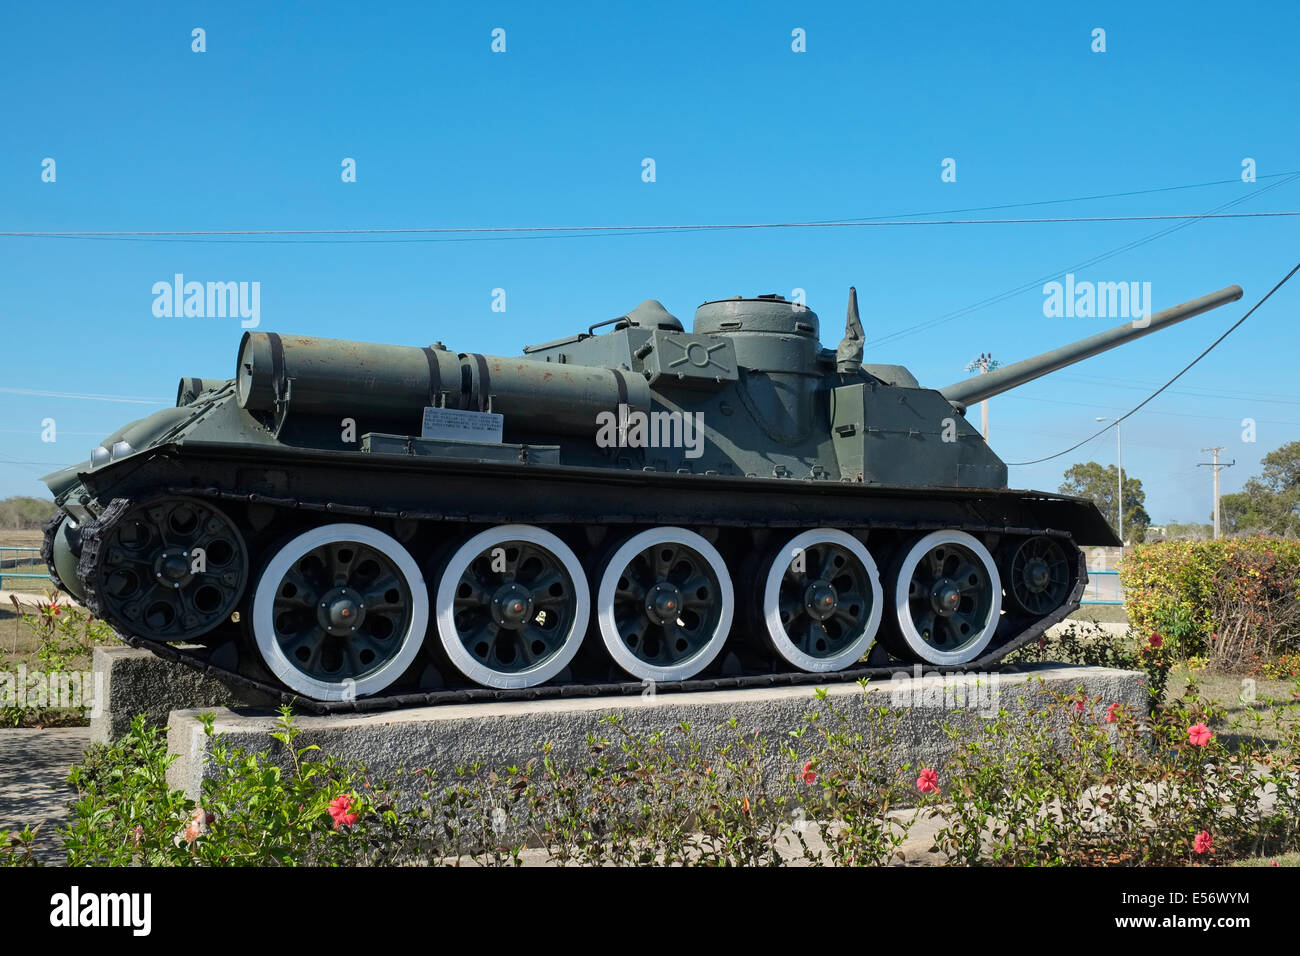 A SAU-100 tank at the Bay of Pigs Museum, Playa Giron, Cuba. Stock Photo